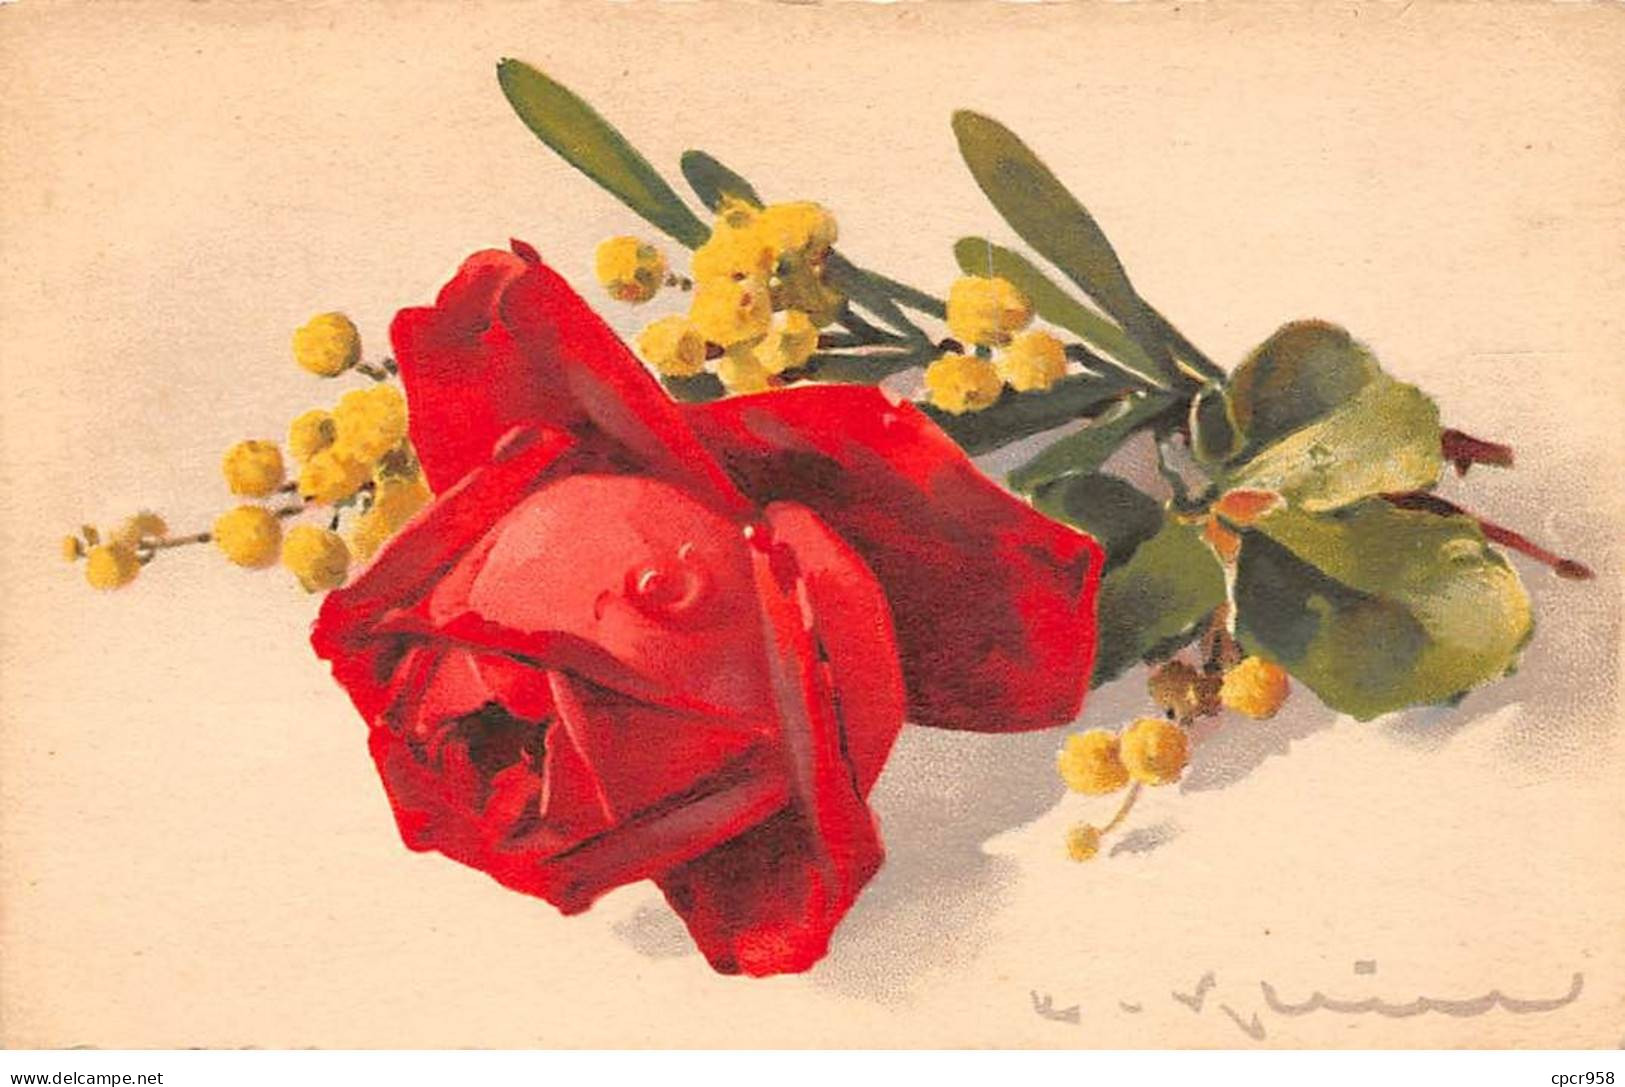 Illustrateur - N°91711 - C. Klein - Une Rose Avec Du Mimosa - Klein, Catharina